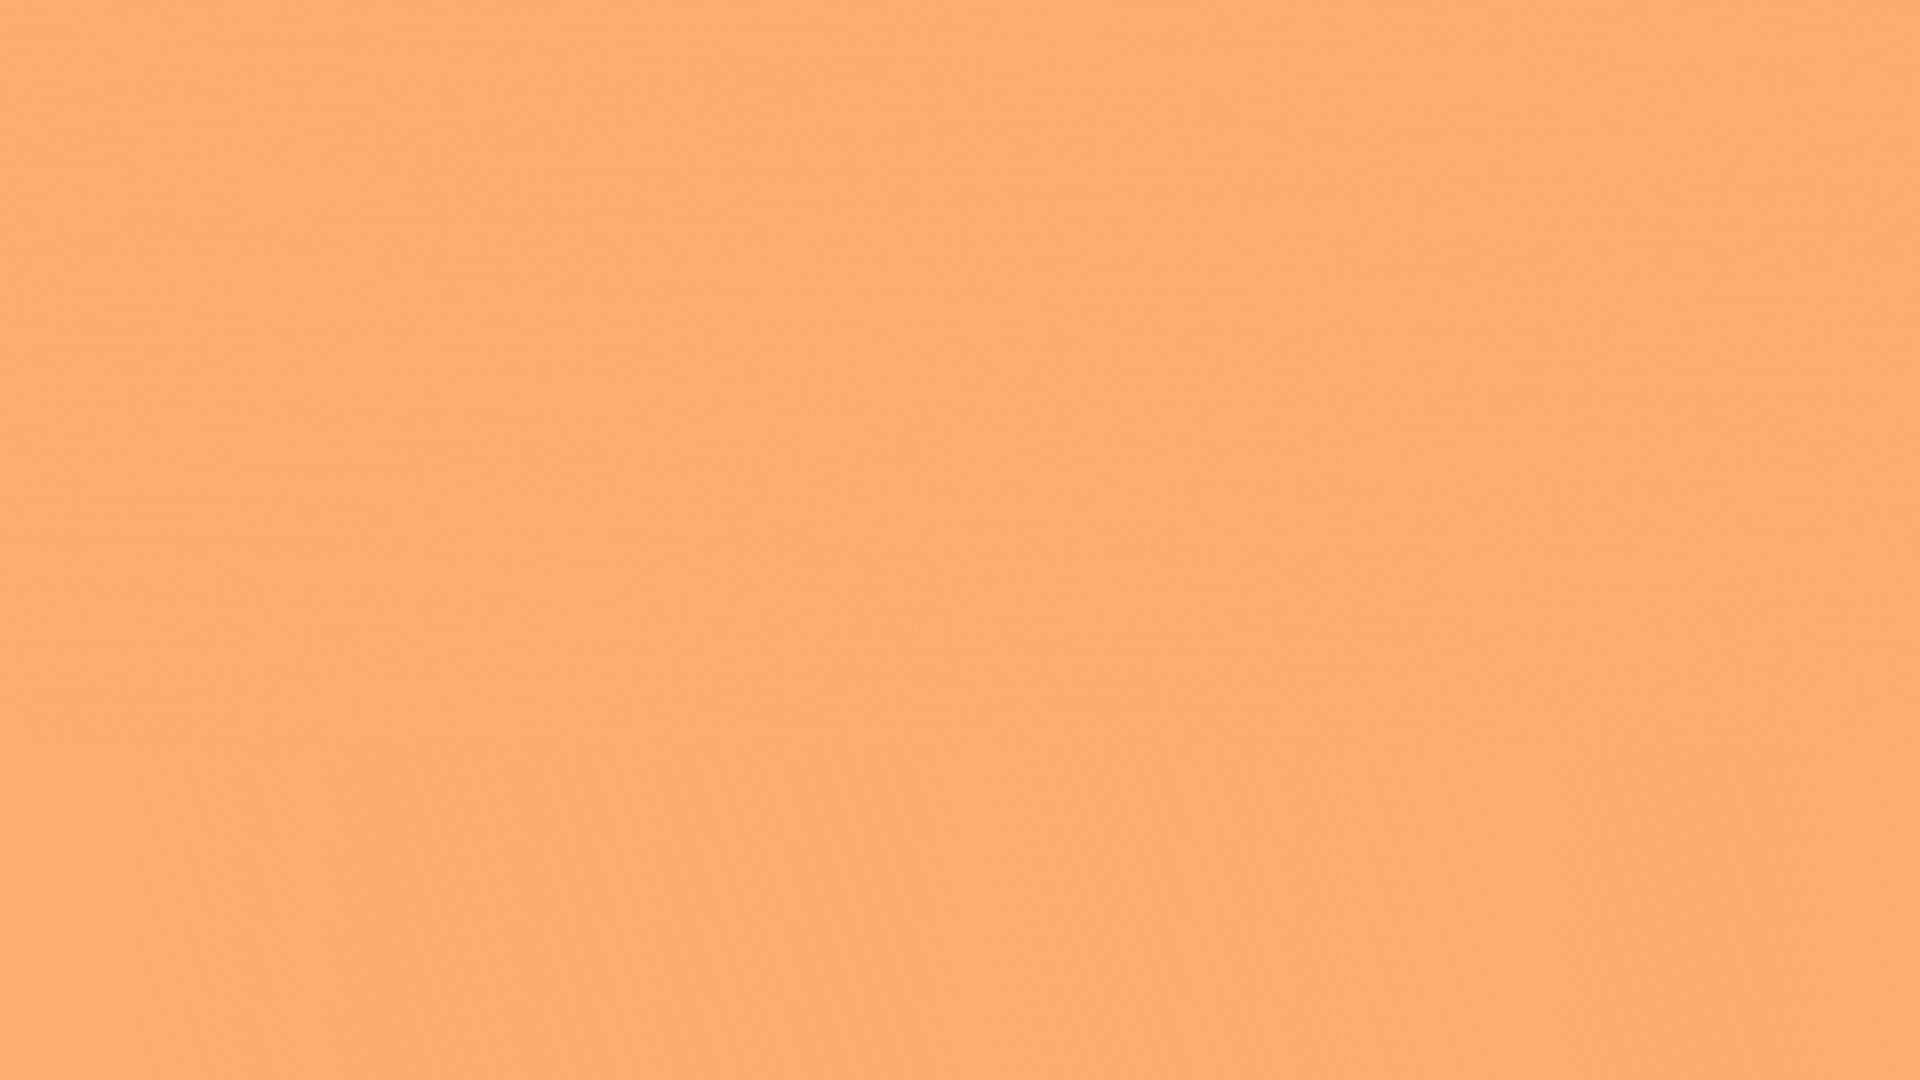 Orange 3로 데이터분석 쉽게하기(4기)